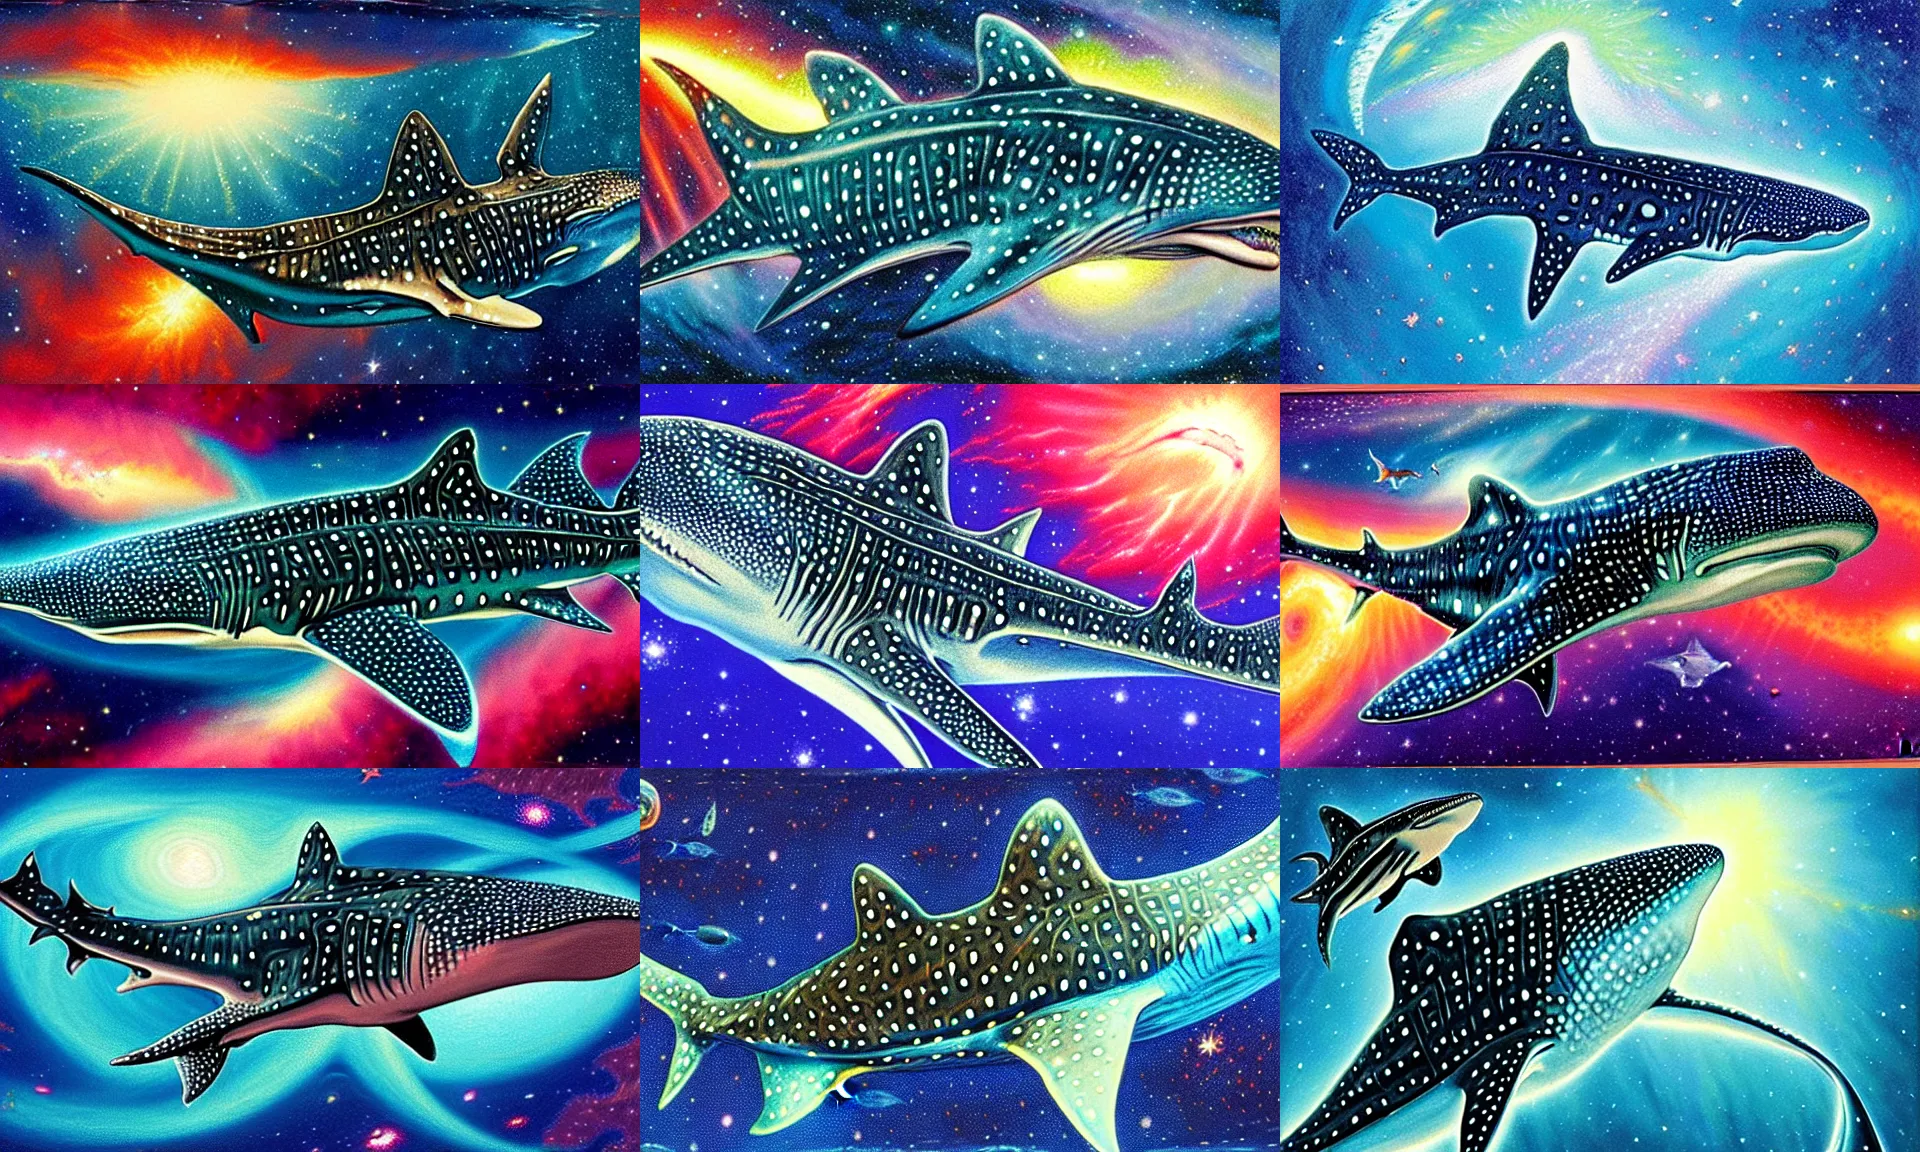 Prompt: finely detailed gouache painting of a whale shark, swirling luminous nebula background, bob eggleton, ultra detailed, gouache illustration of whale - shark foreground, colorful nebula background, mike ploog, sharp focus